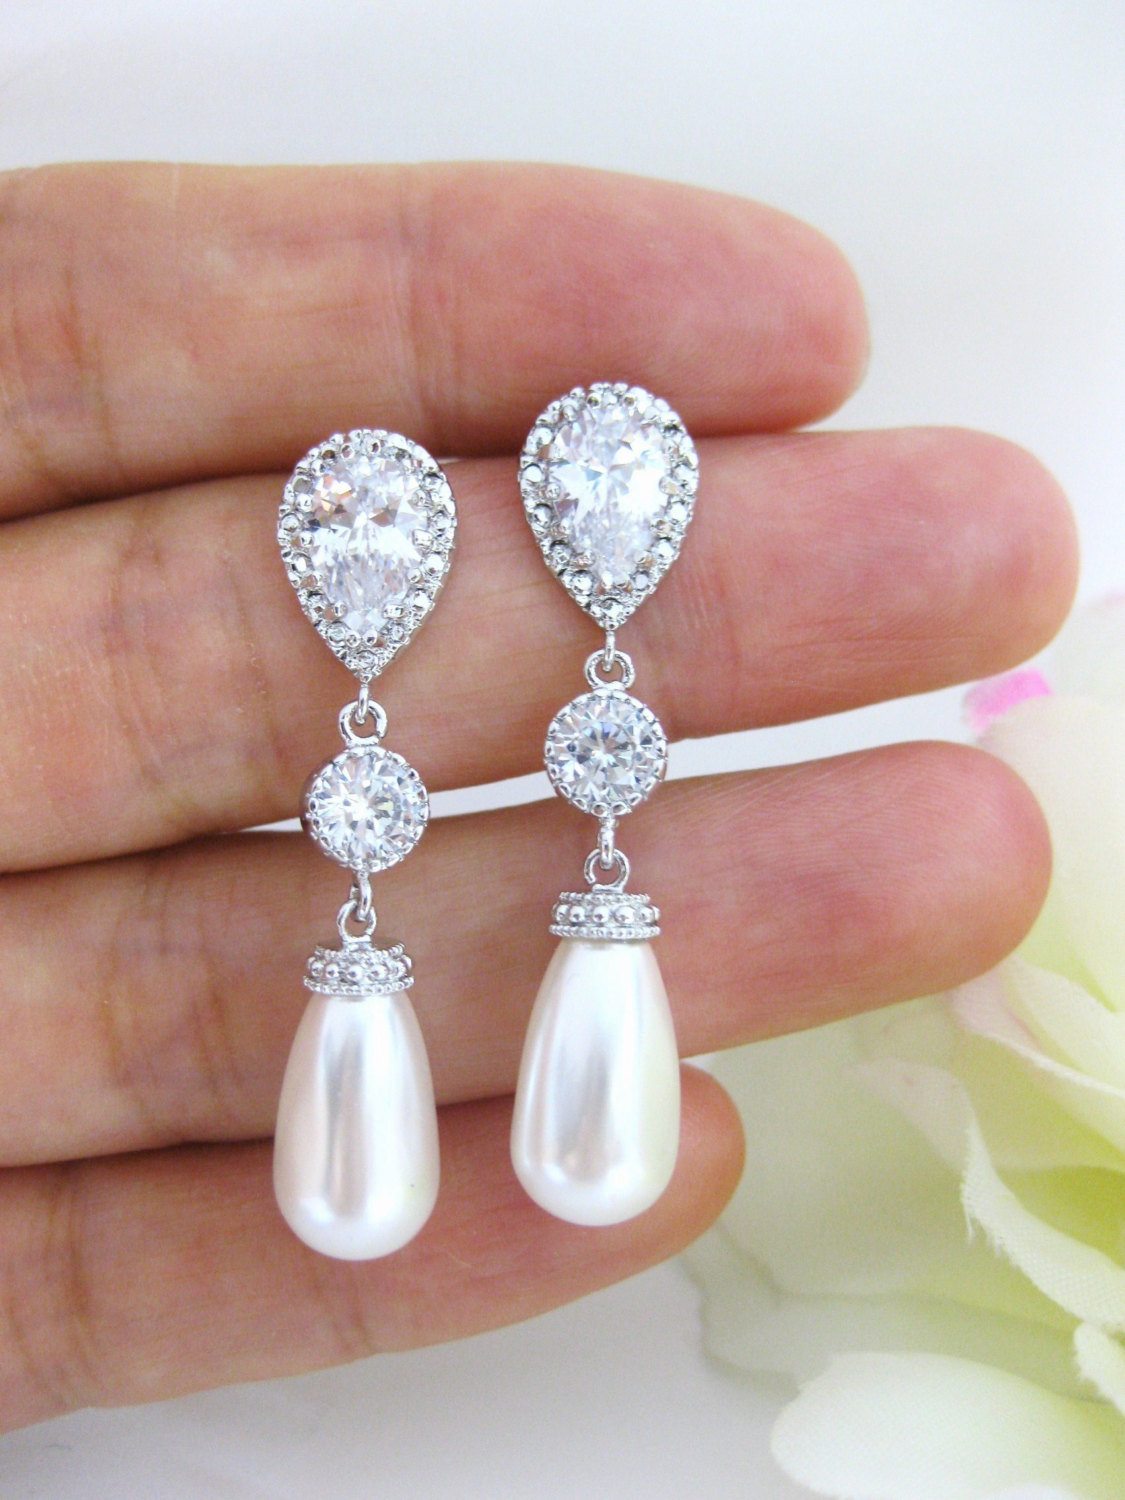 Bridal Pearl Earrings Wedding Jewelry Swarovski Teardrop Pearl Cubic Zirconia Earrings Bridesmaid Gift Long Pearl Earrings (e089)